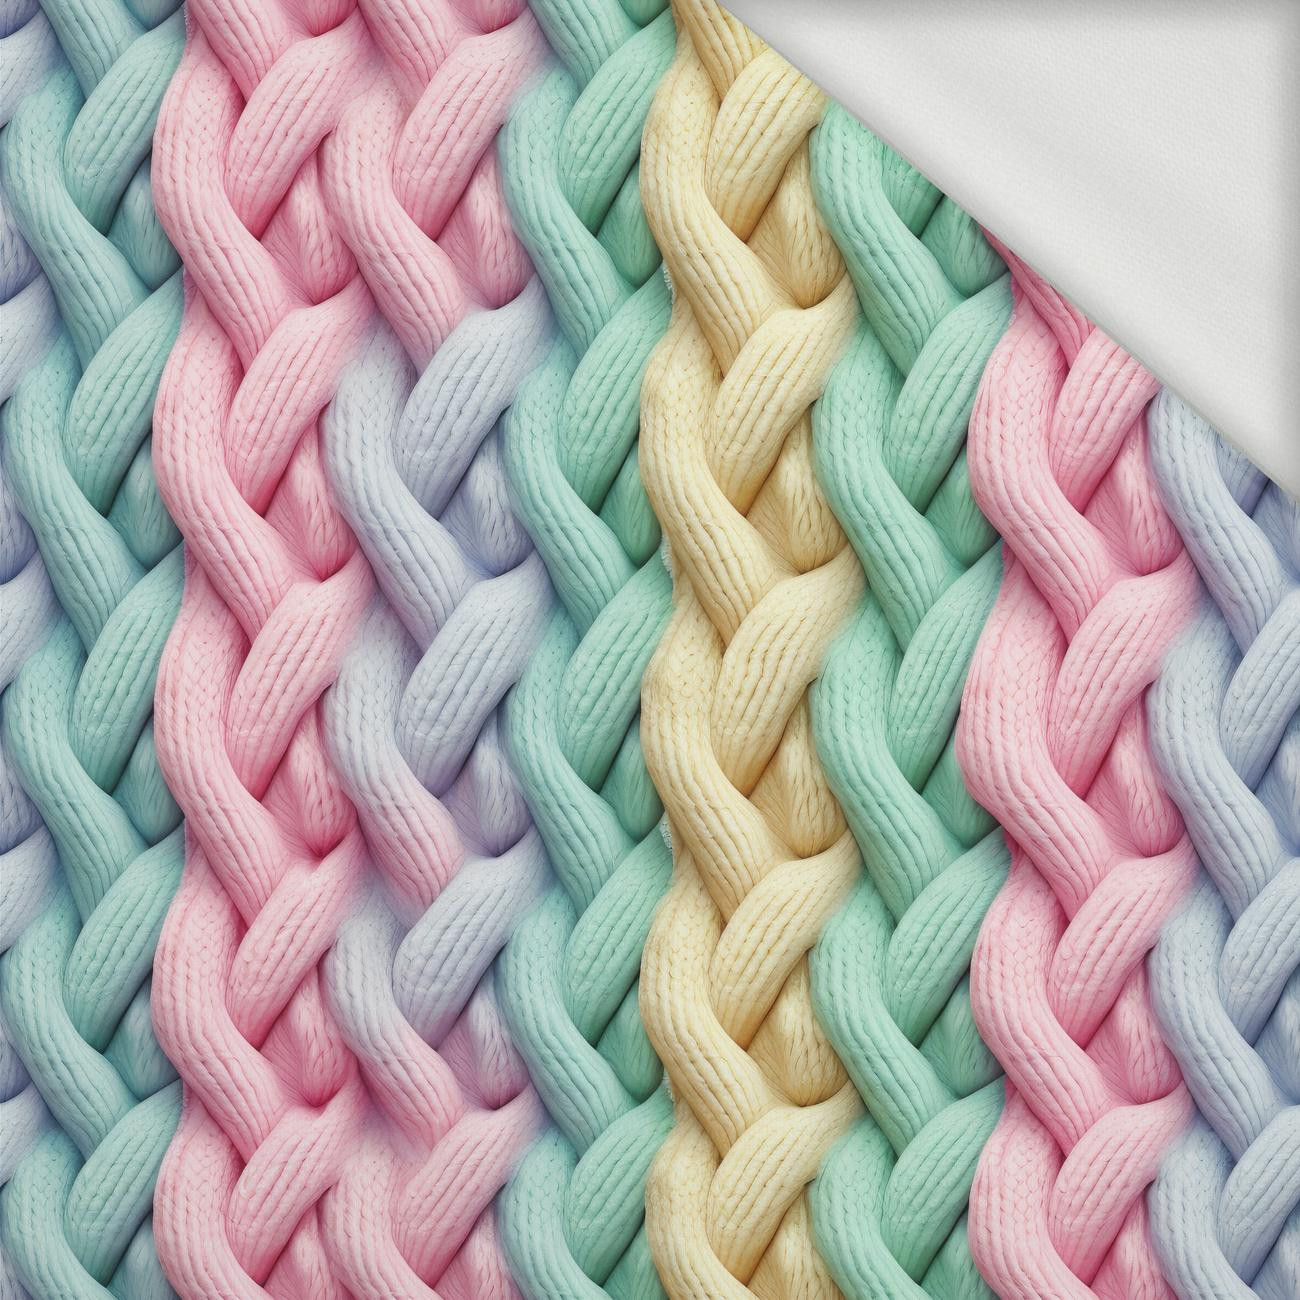 IMITATION PASTEL SWEATER PAT. 2 - looped knit fabric